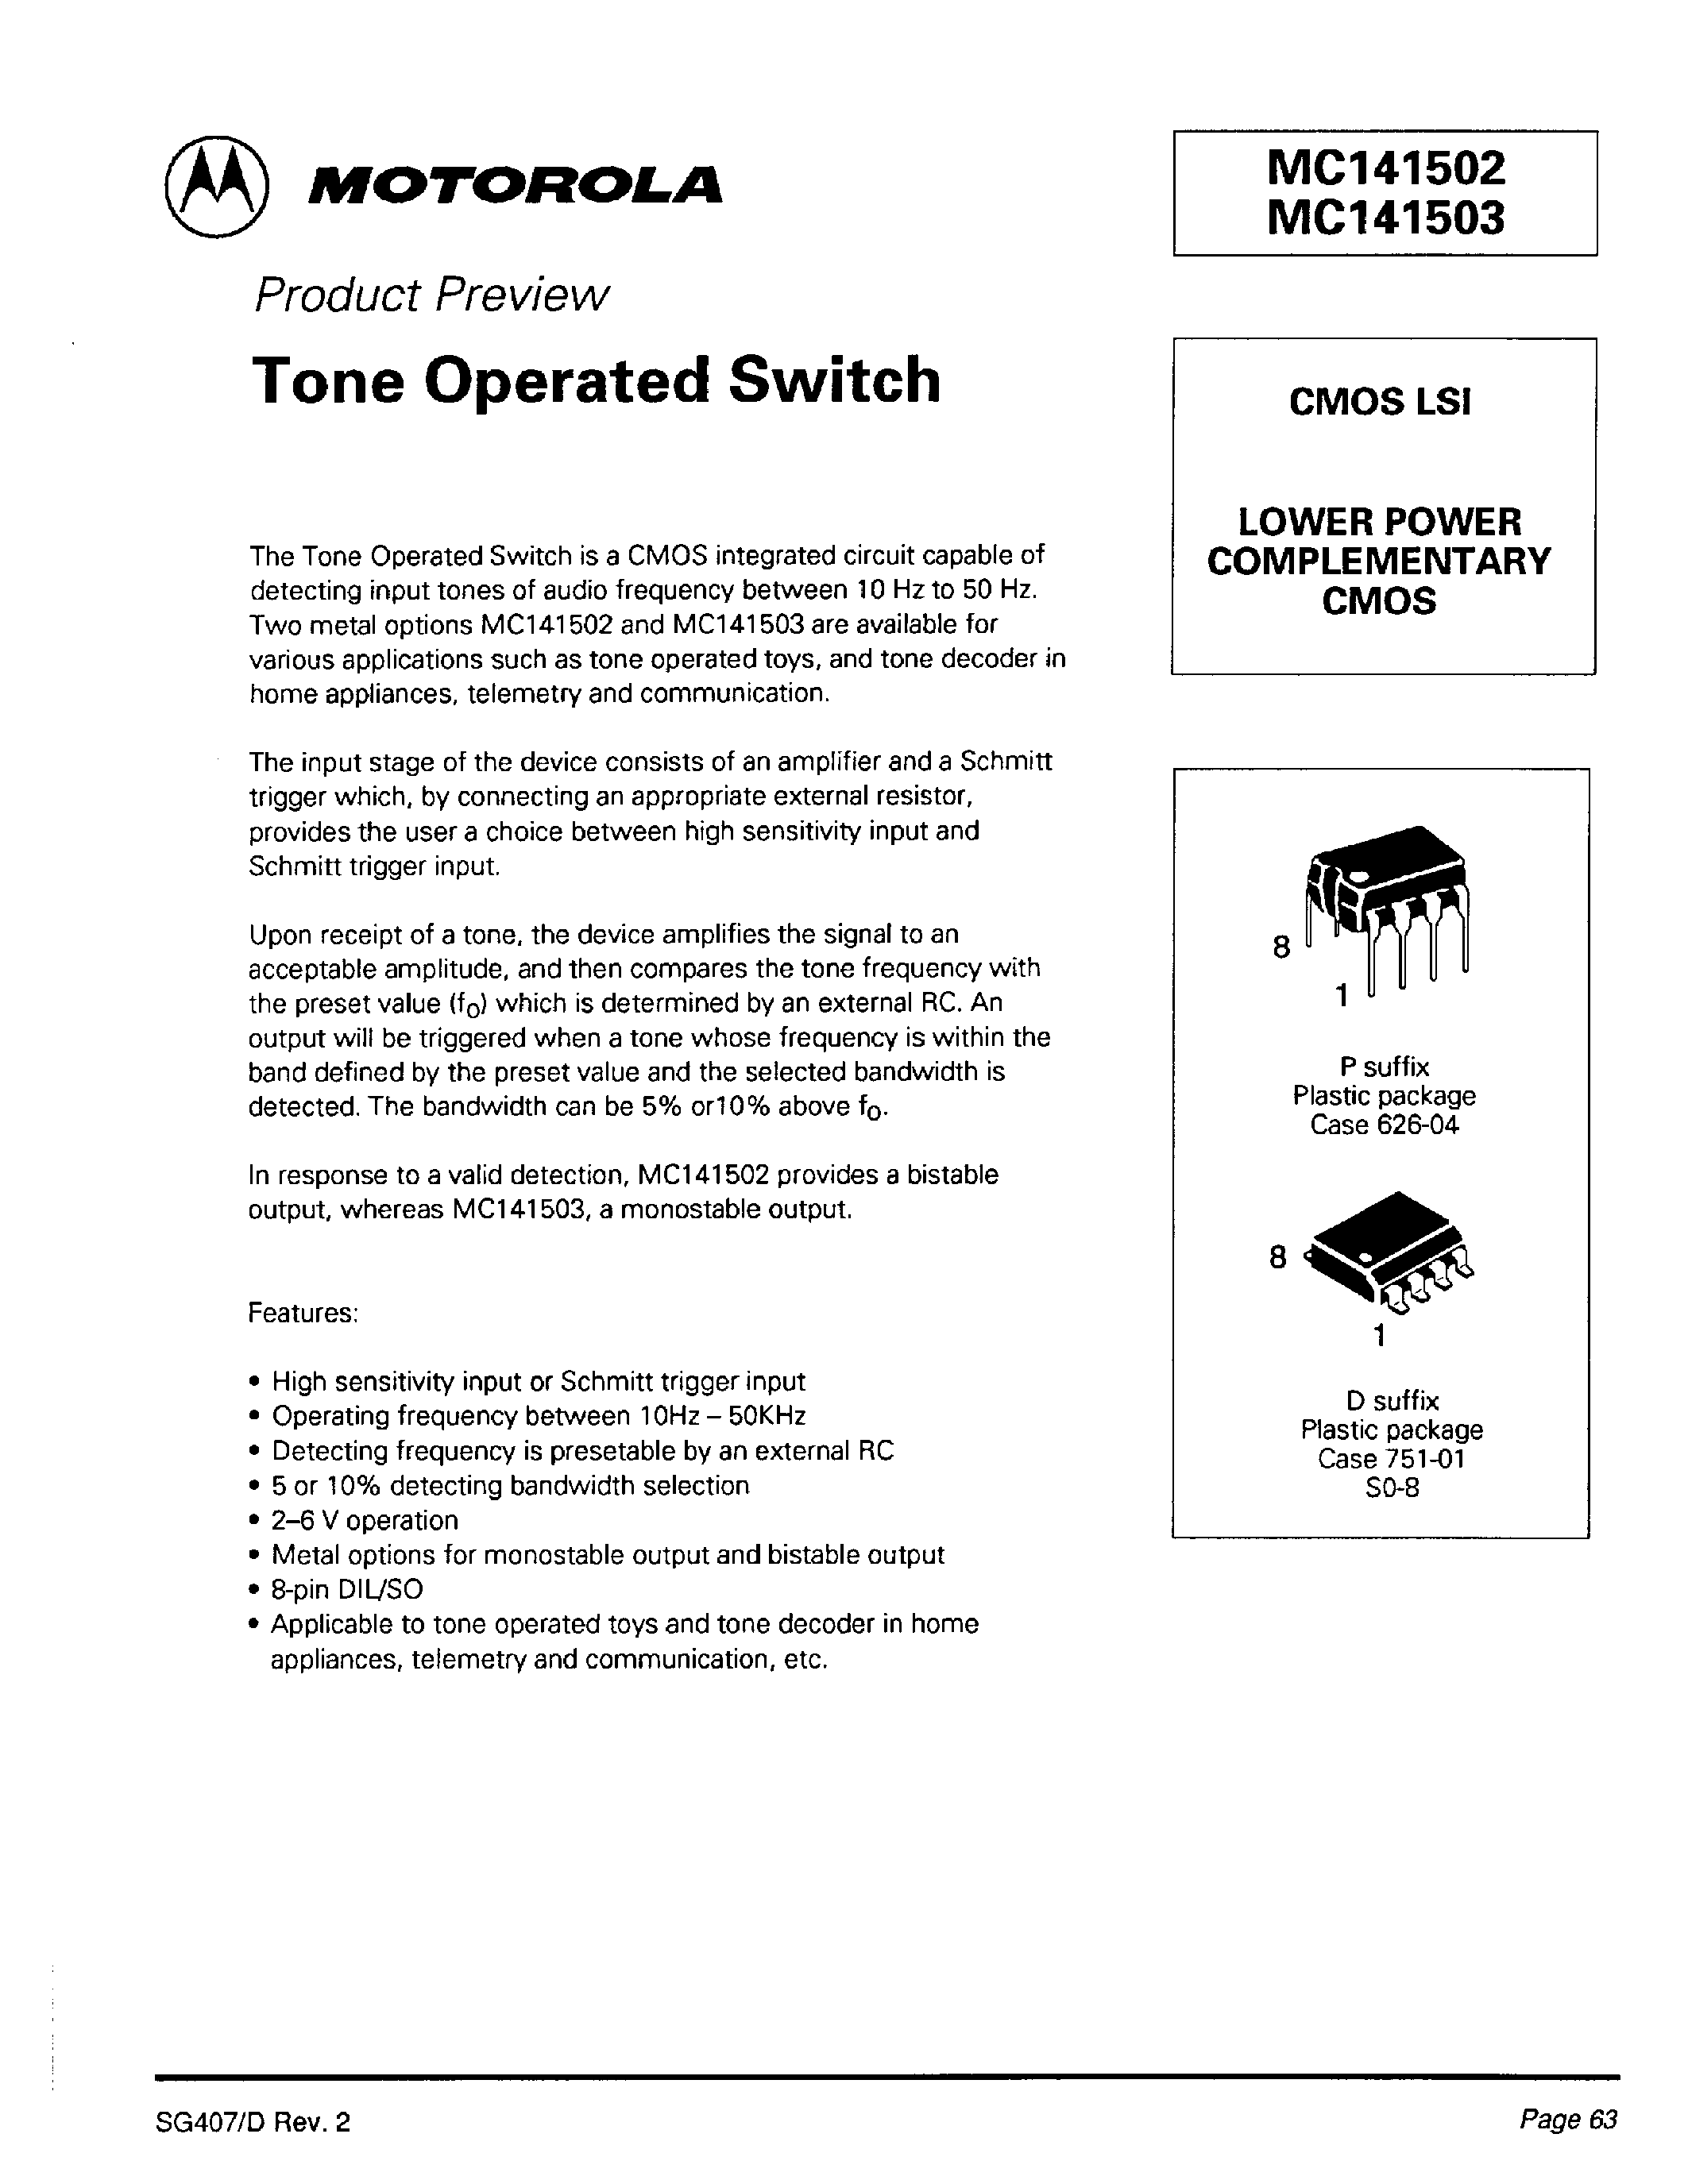 Datasheet MC141503D - Tone Operated Switch page 1